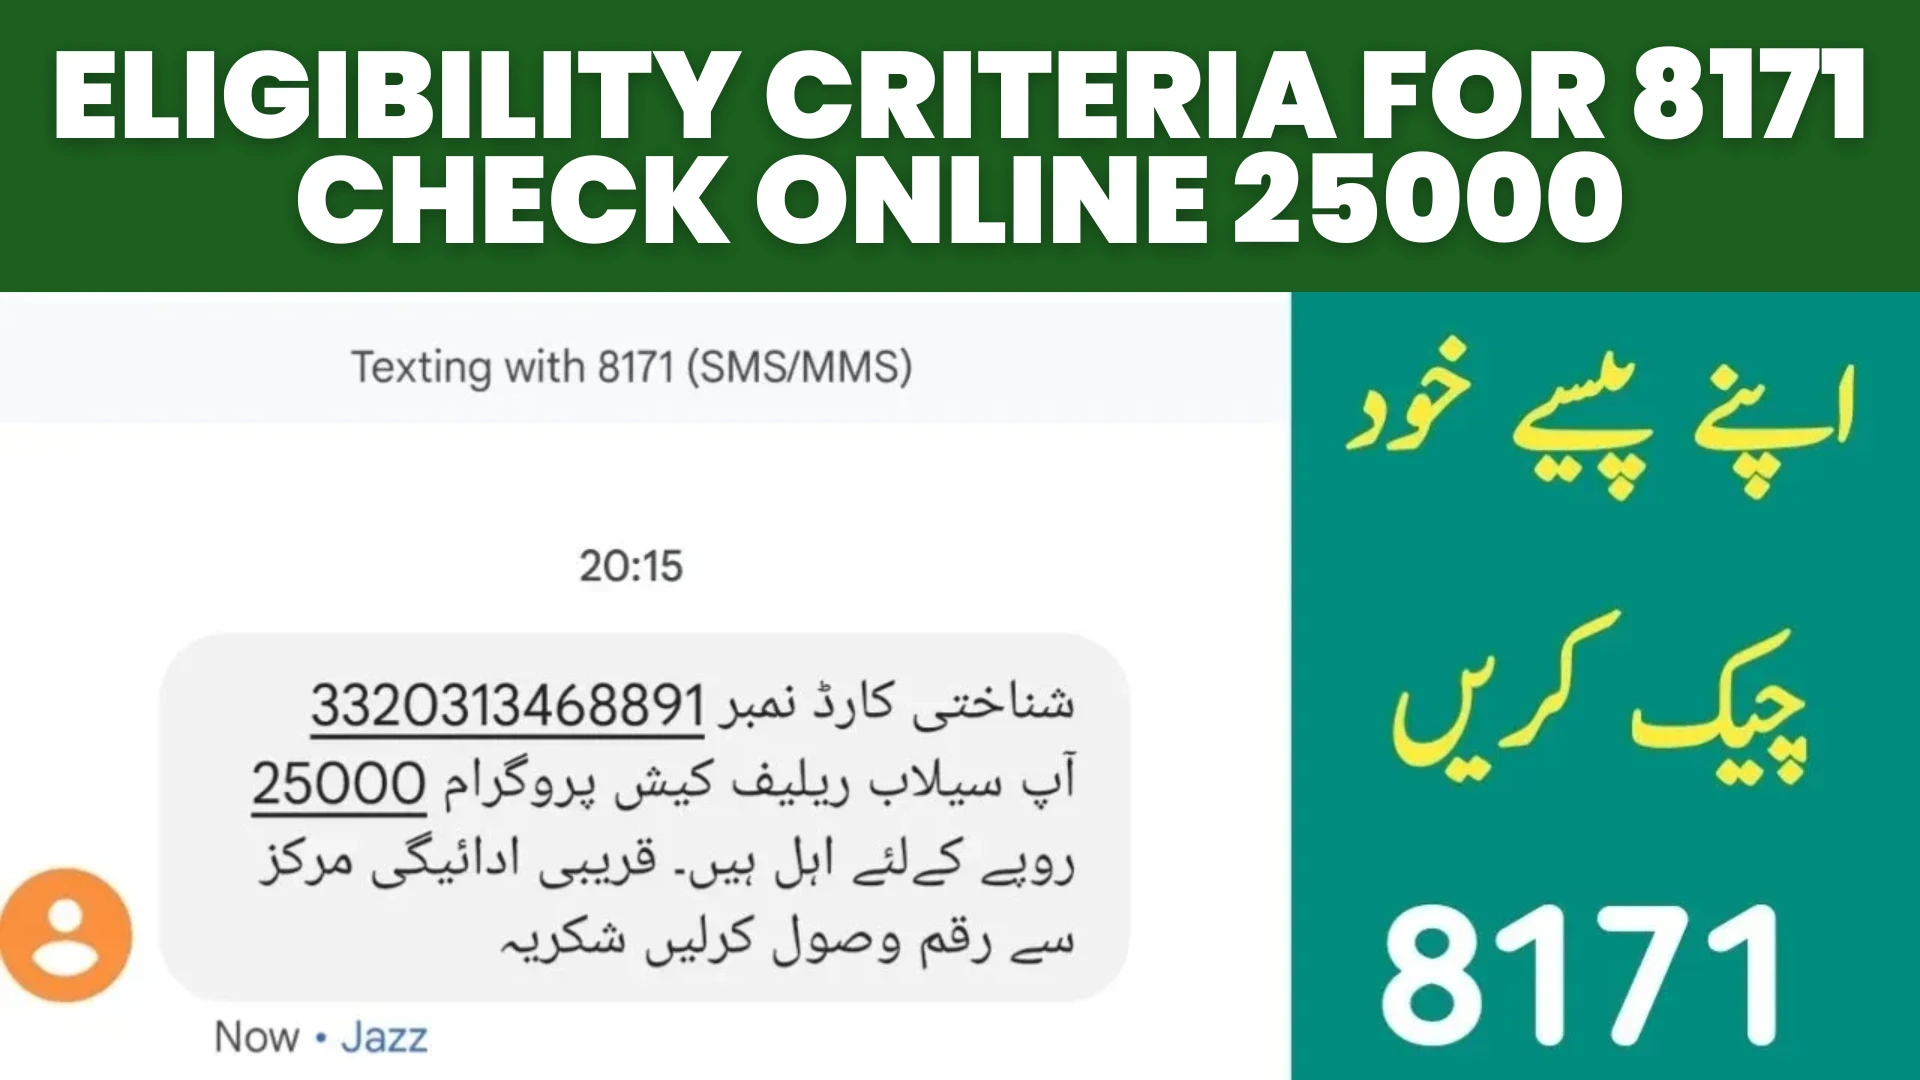 Eligibility Criteria for 8171 Check Online 25000